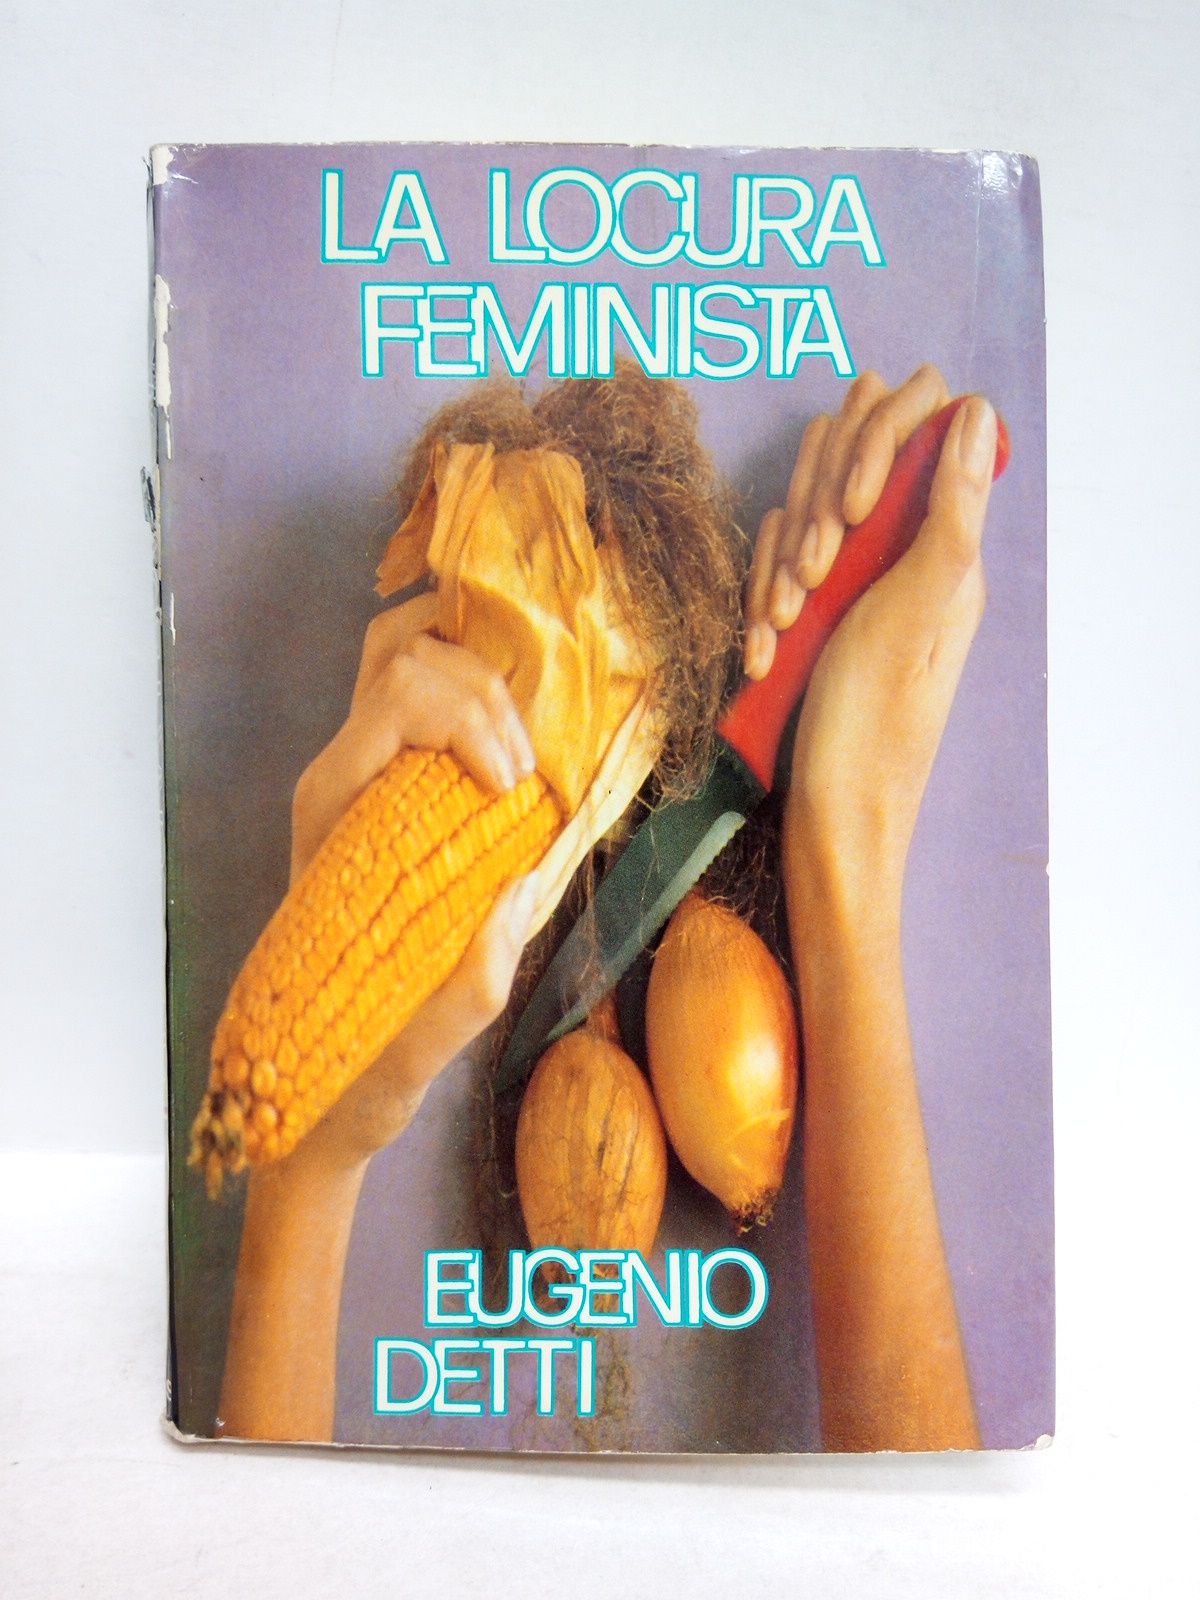 DETTI, Eugenio - La locura feminista